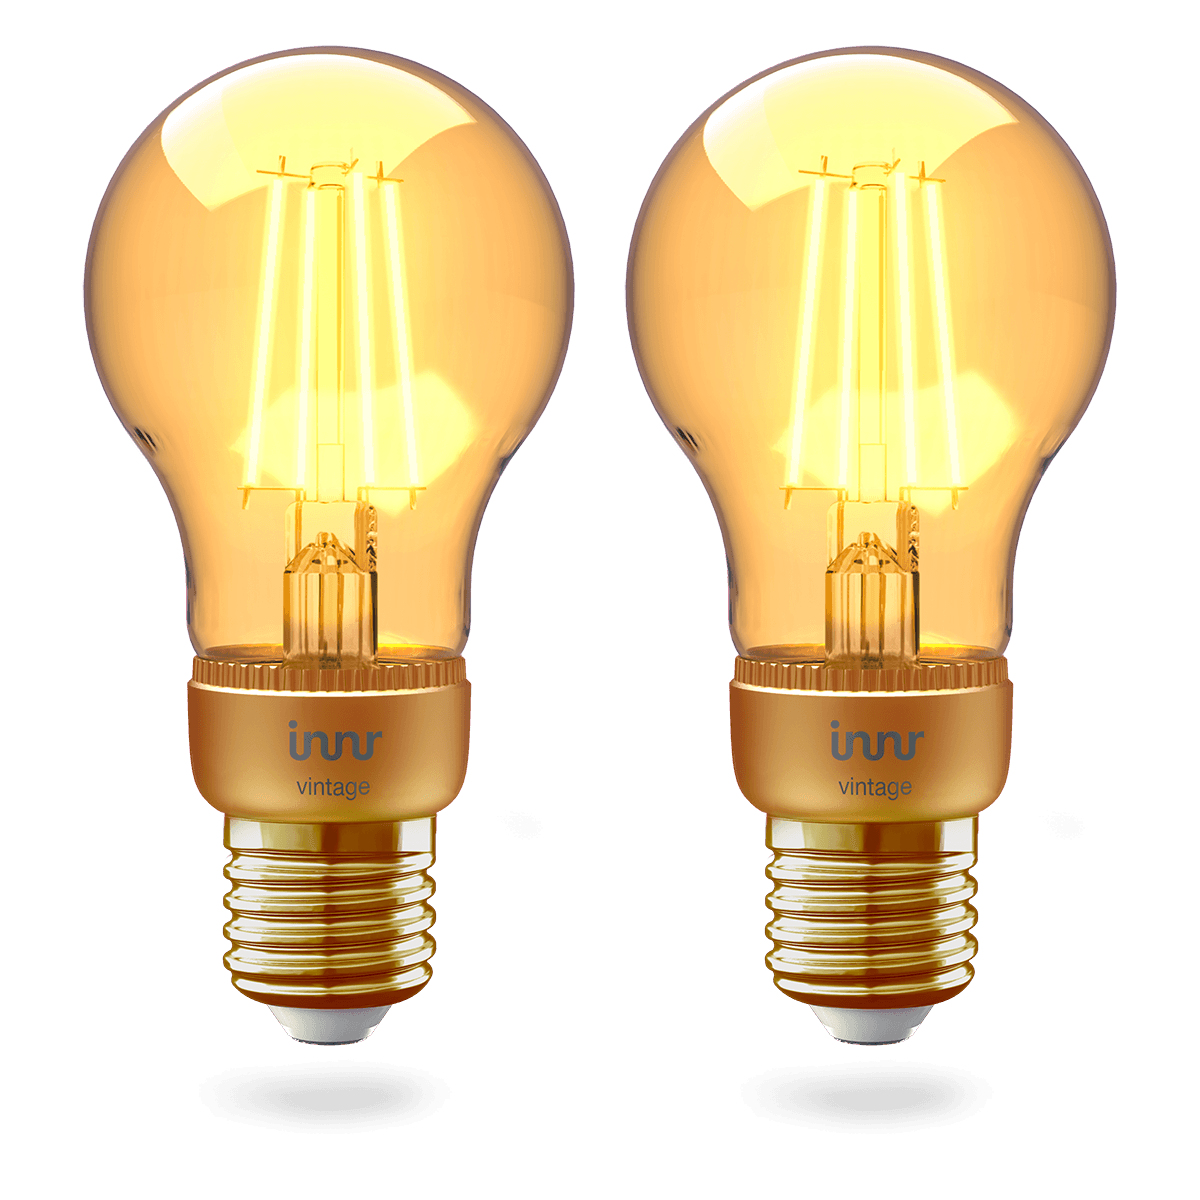 Innr Lighting Innr RF 263 - Intelligente Glühbirne - Gold - ZigBee - LED - E27 - 350 lm